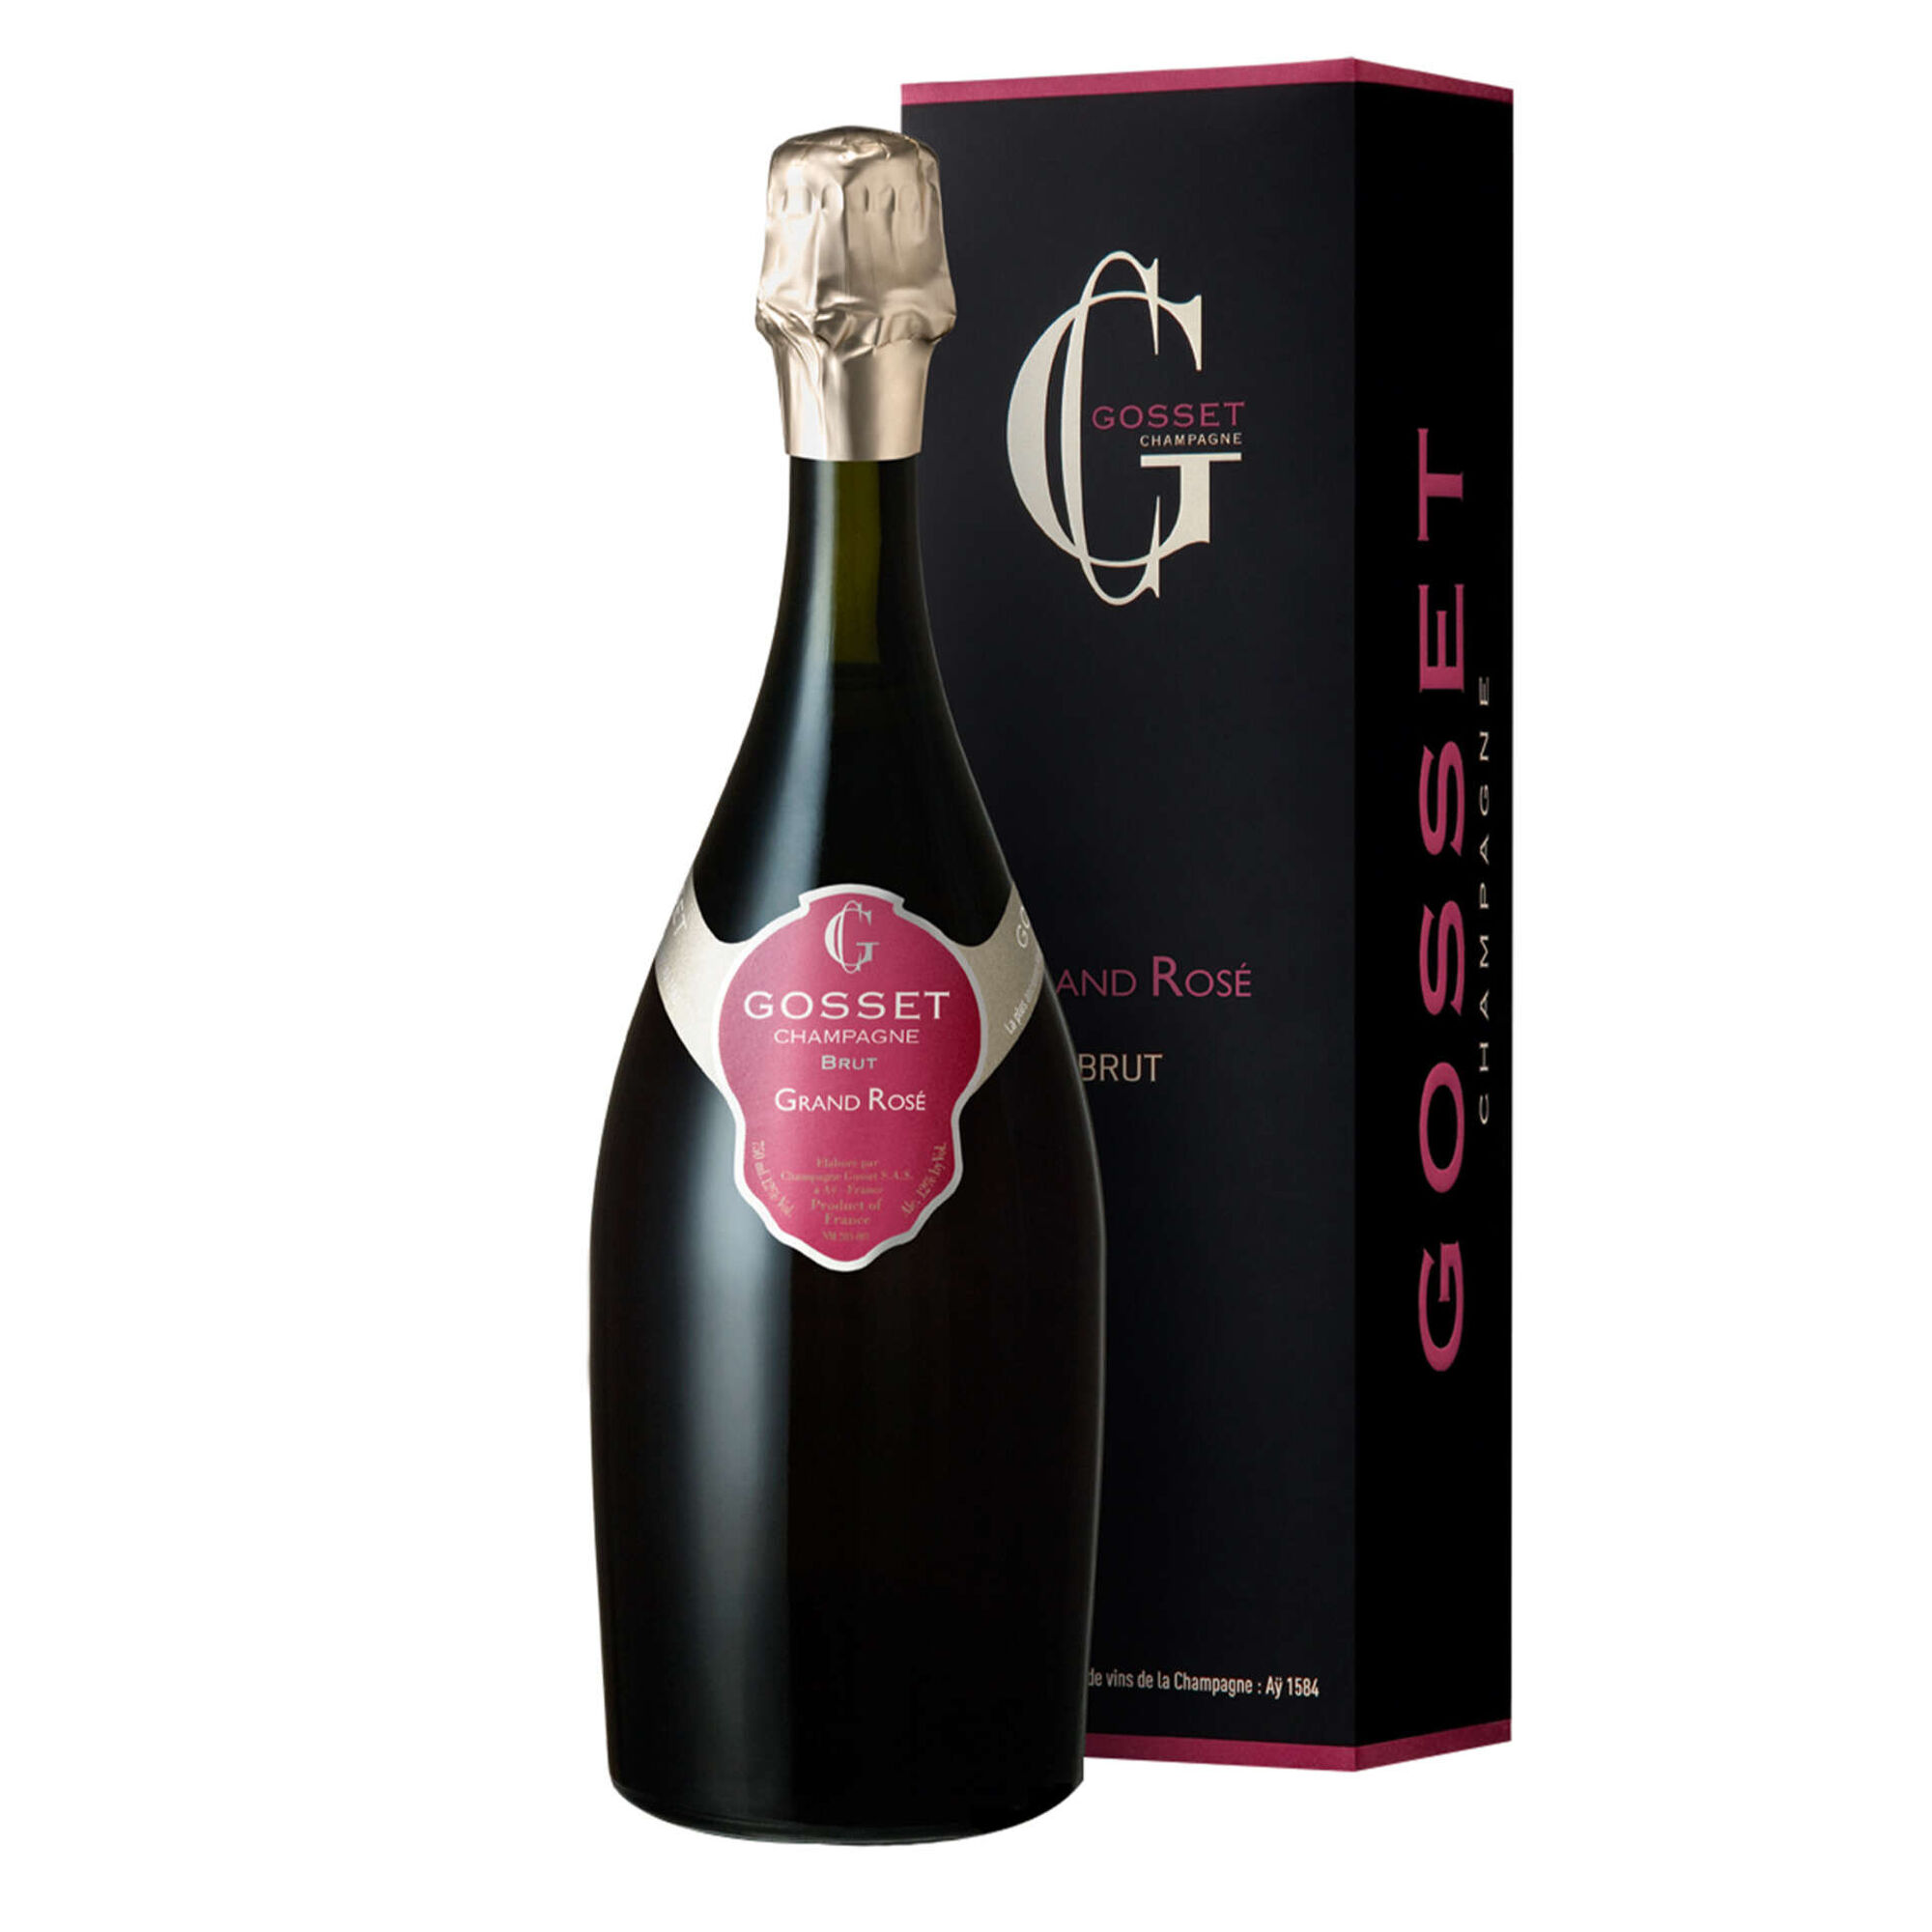 Champagne Gosset Grand Rosé Brut